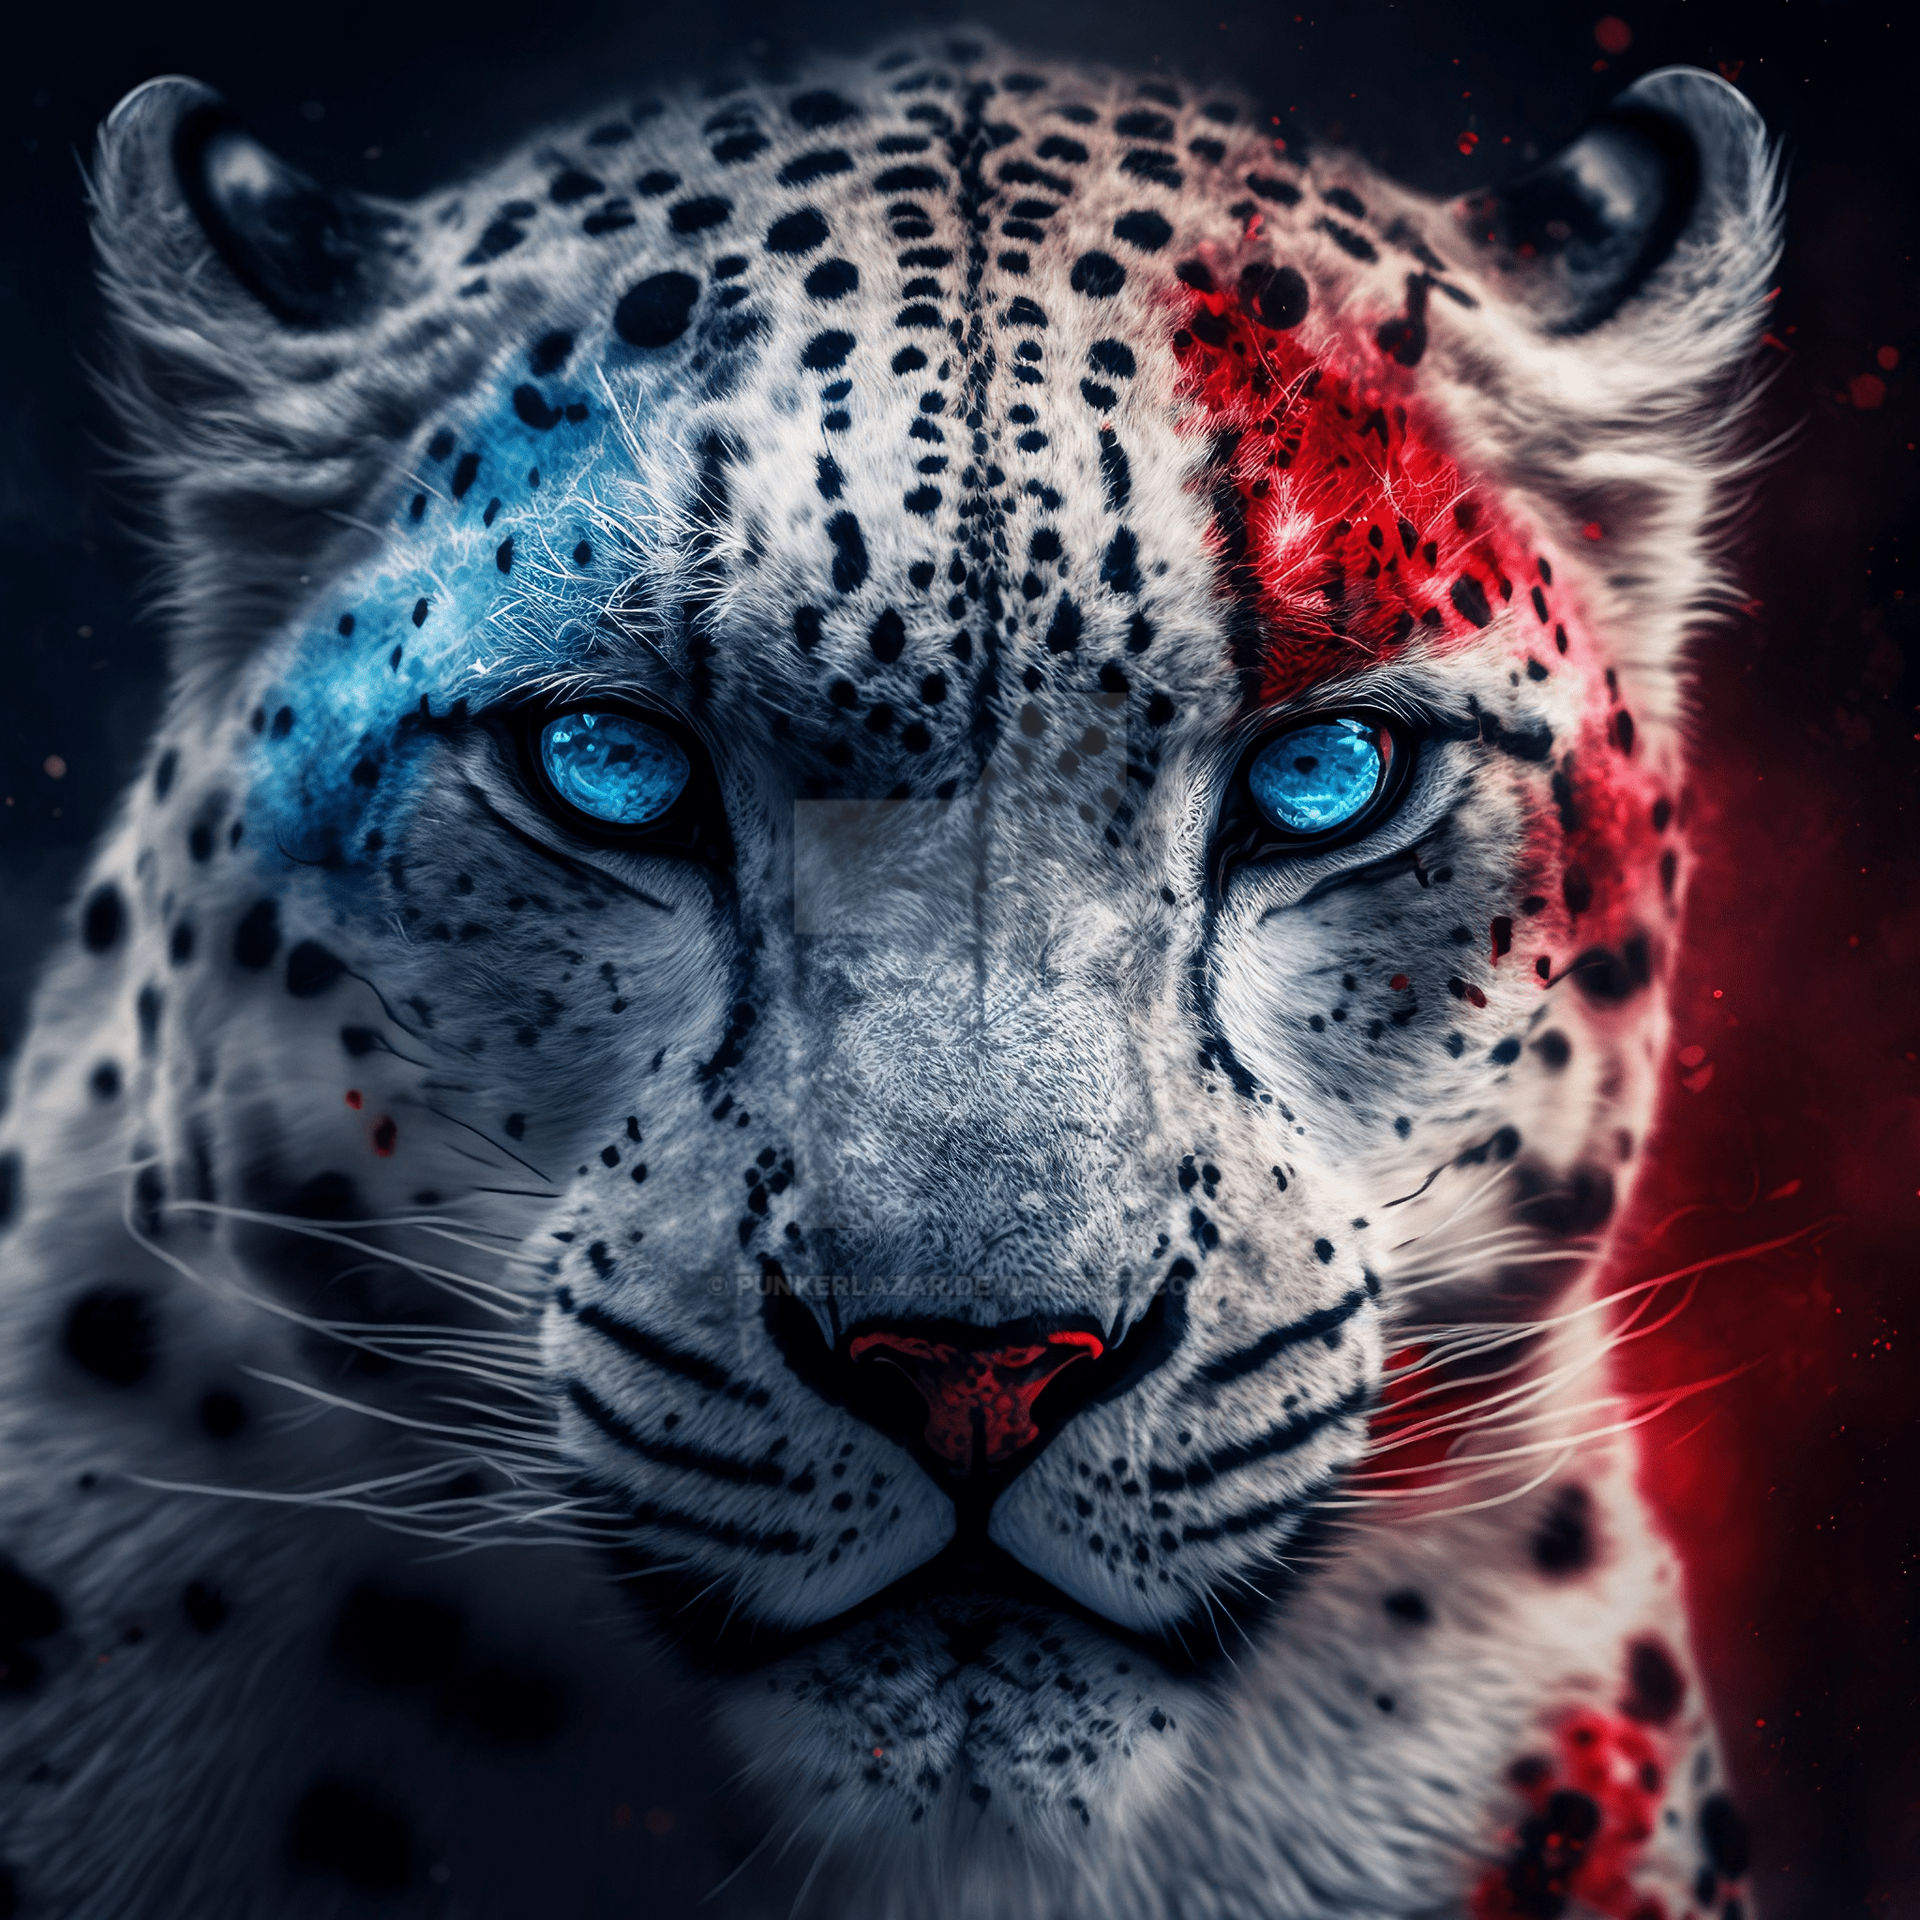 Snow leopard blue eyes 2k (4) by PunkerLazar on DeviantArt